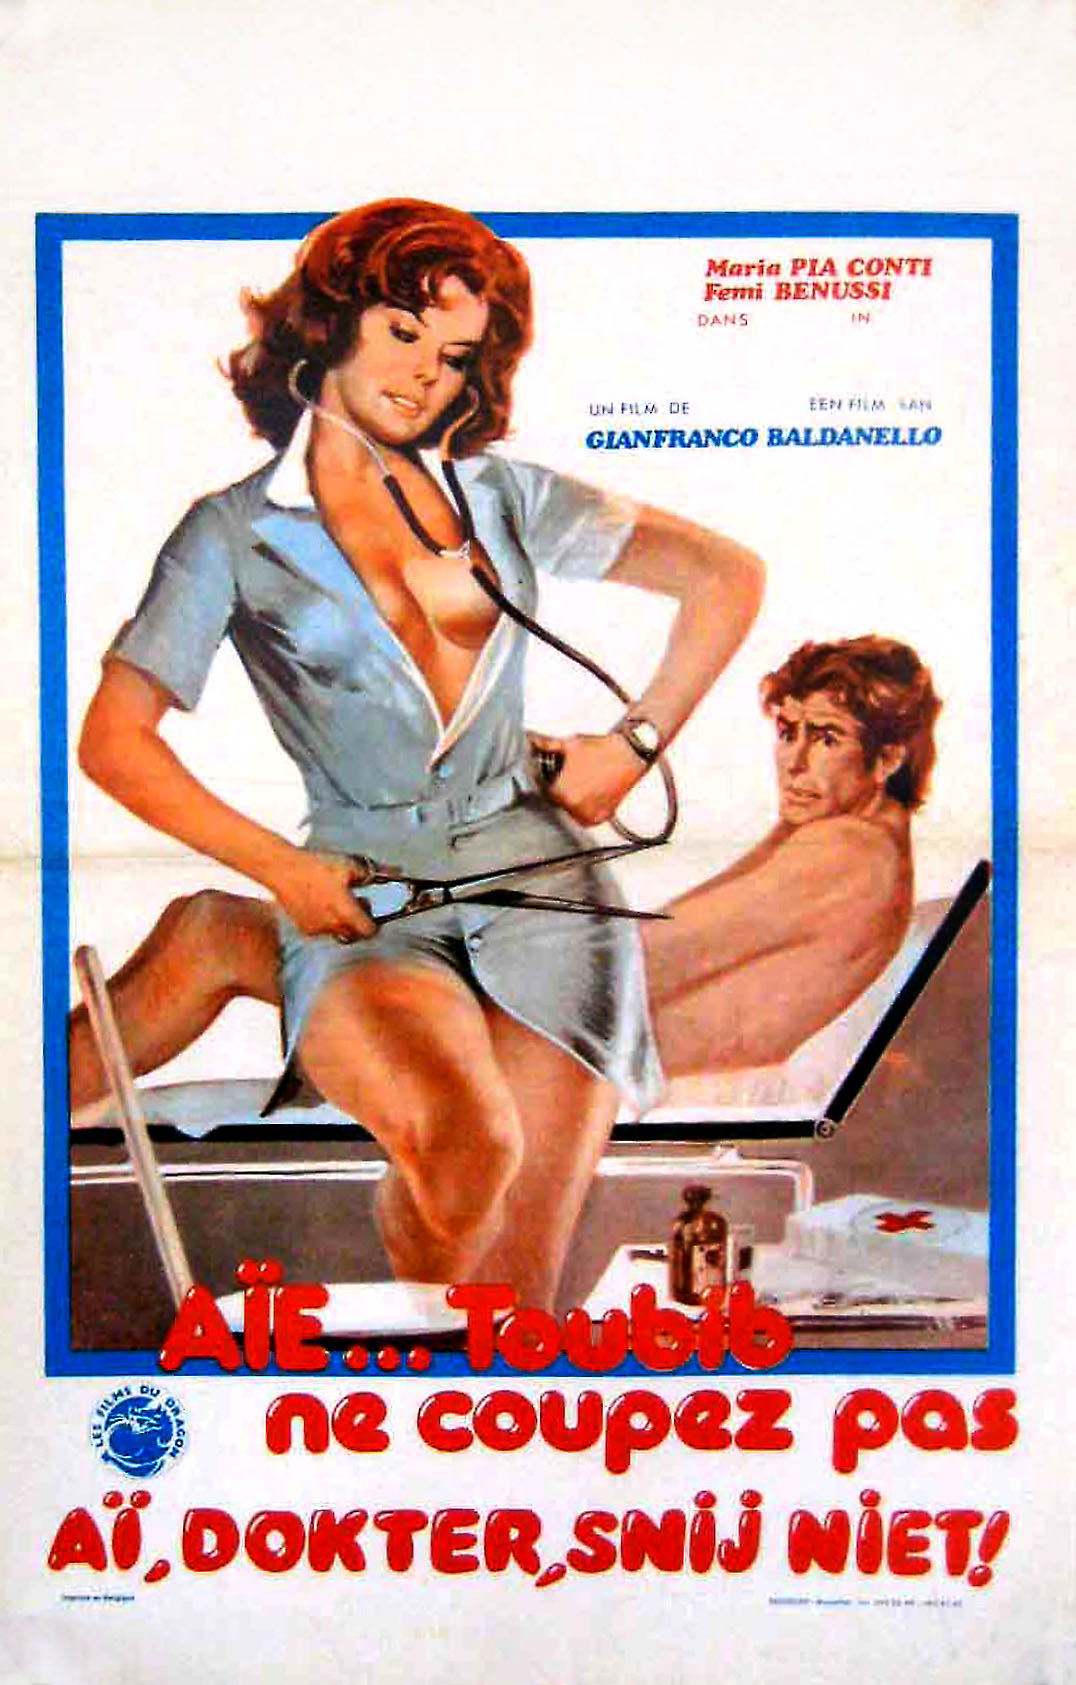 Che dottoressa ragazzi! (1976) with English Subtitles on DVD on DVD